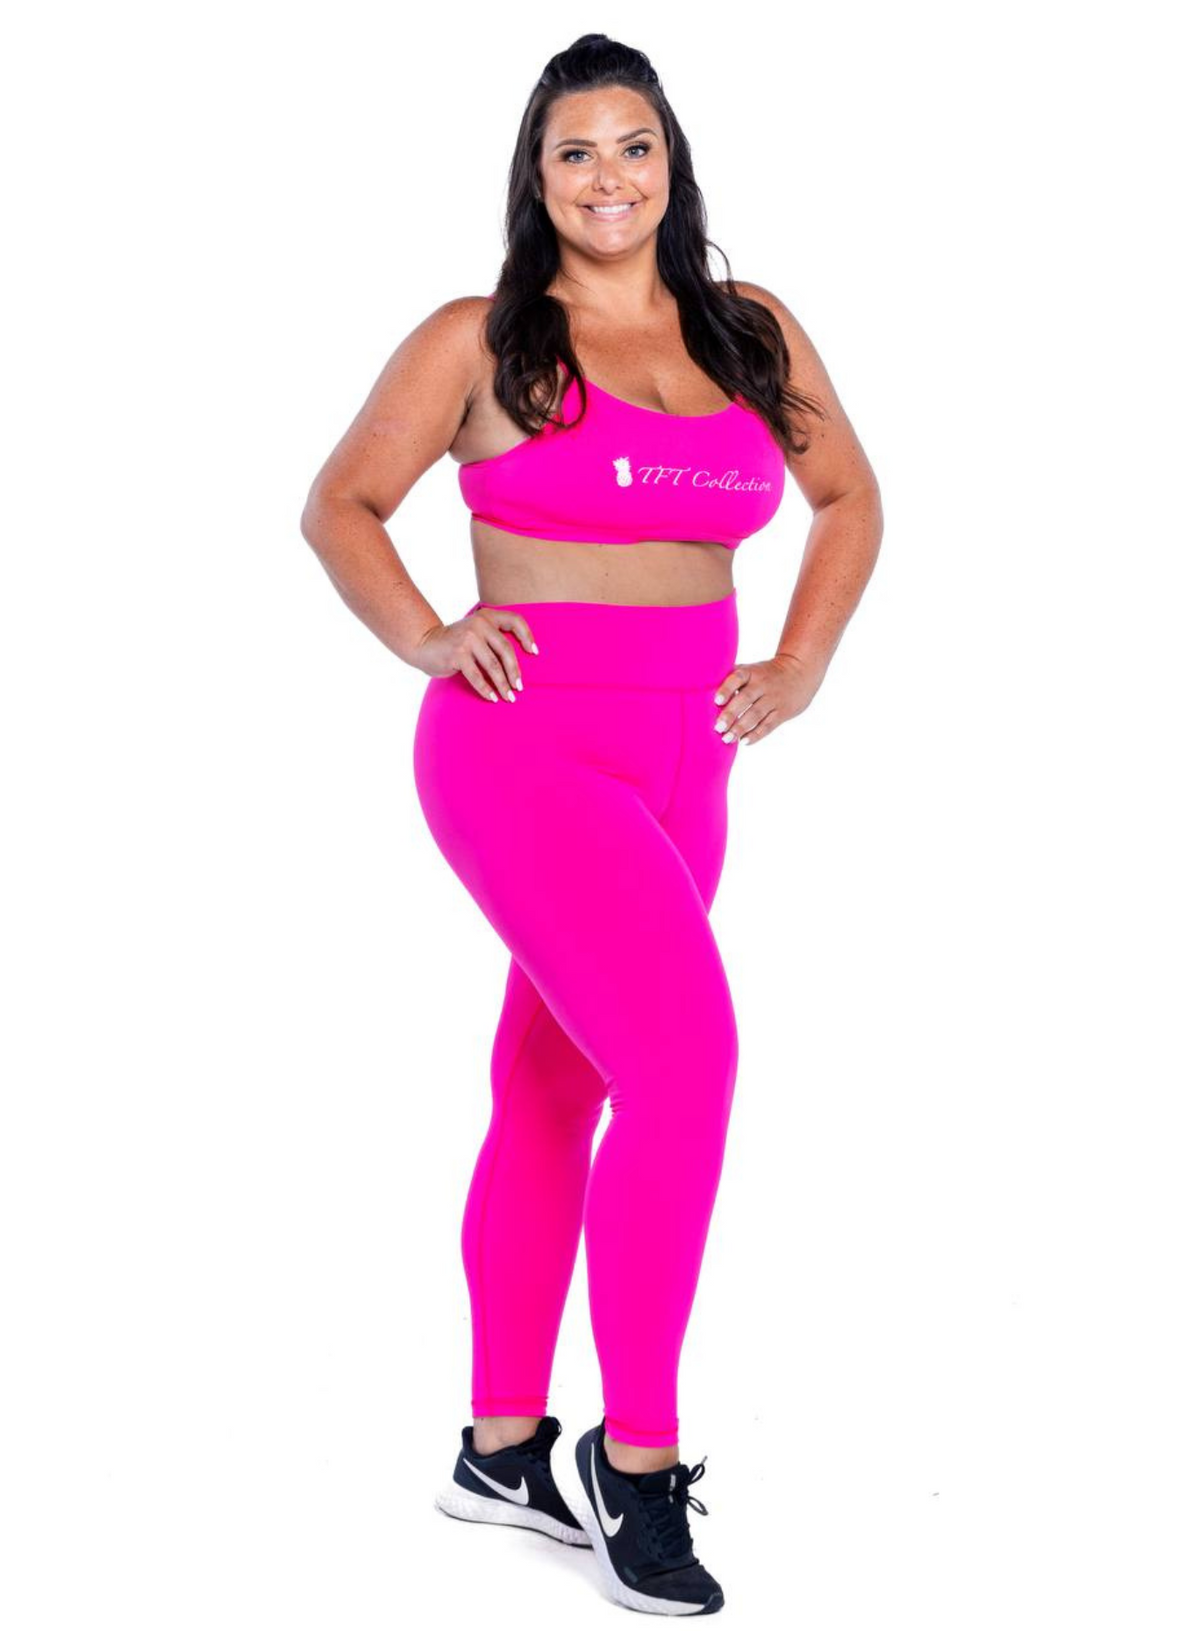 Buy Custom Design Dusty Pink Leggings- Araa Active by araaactiveuk